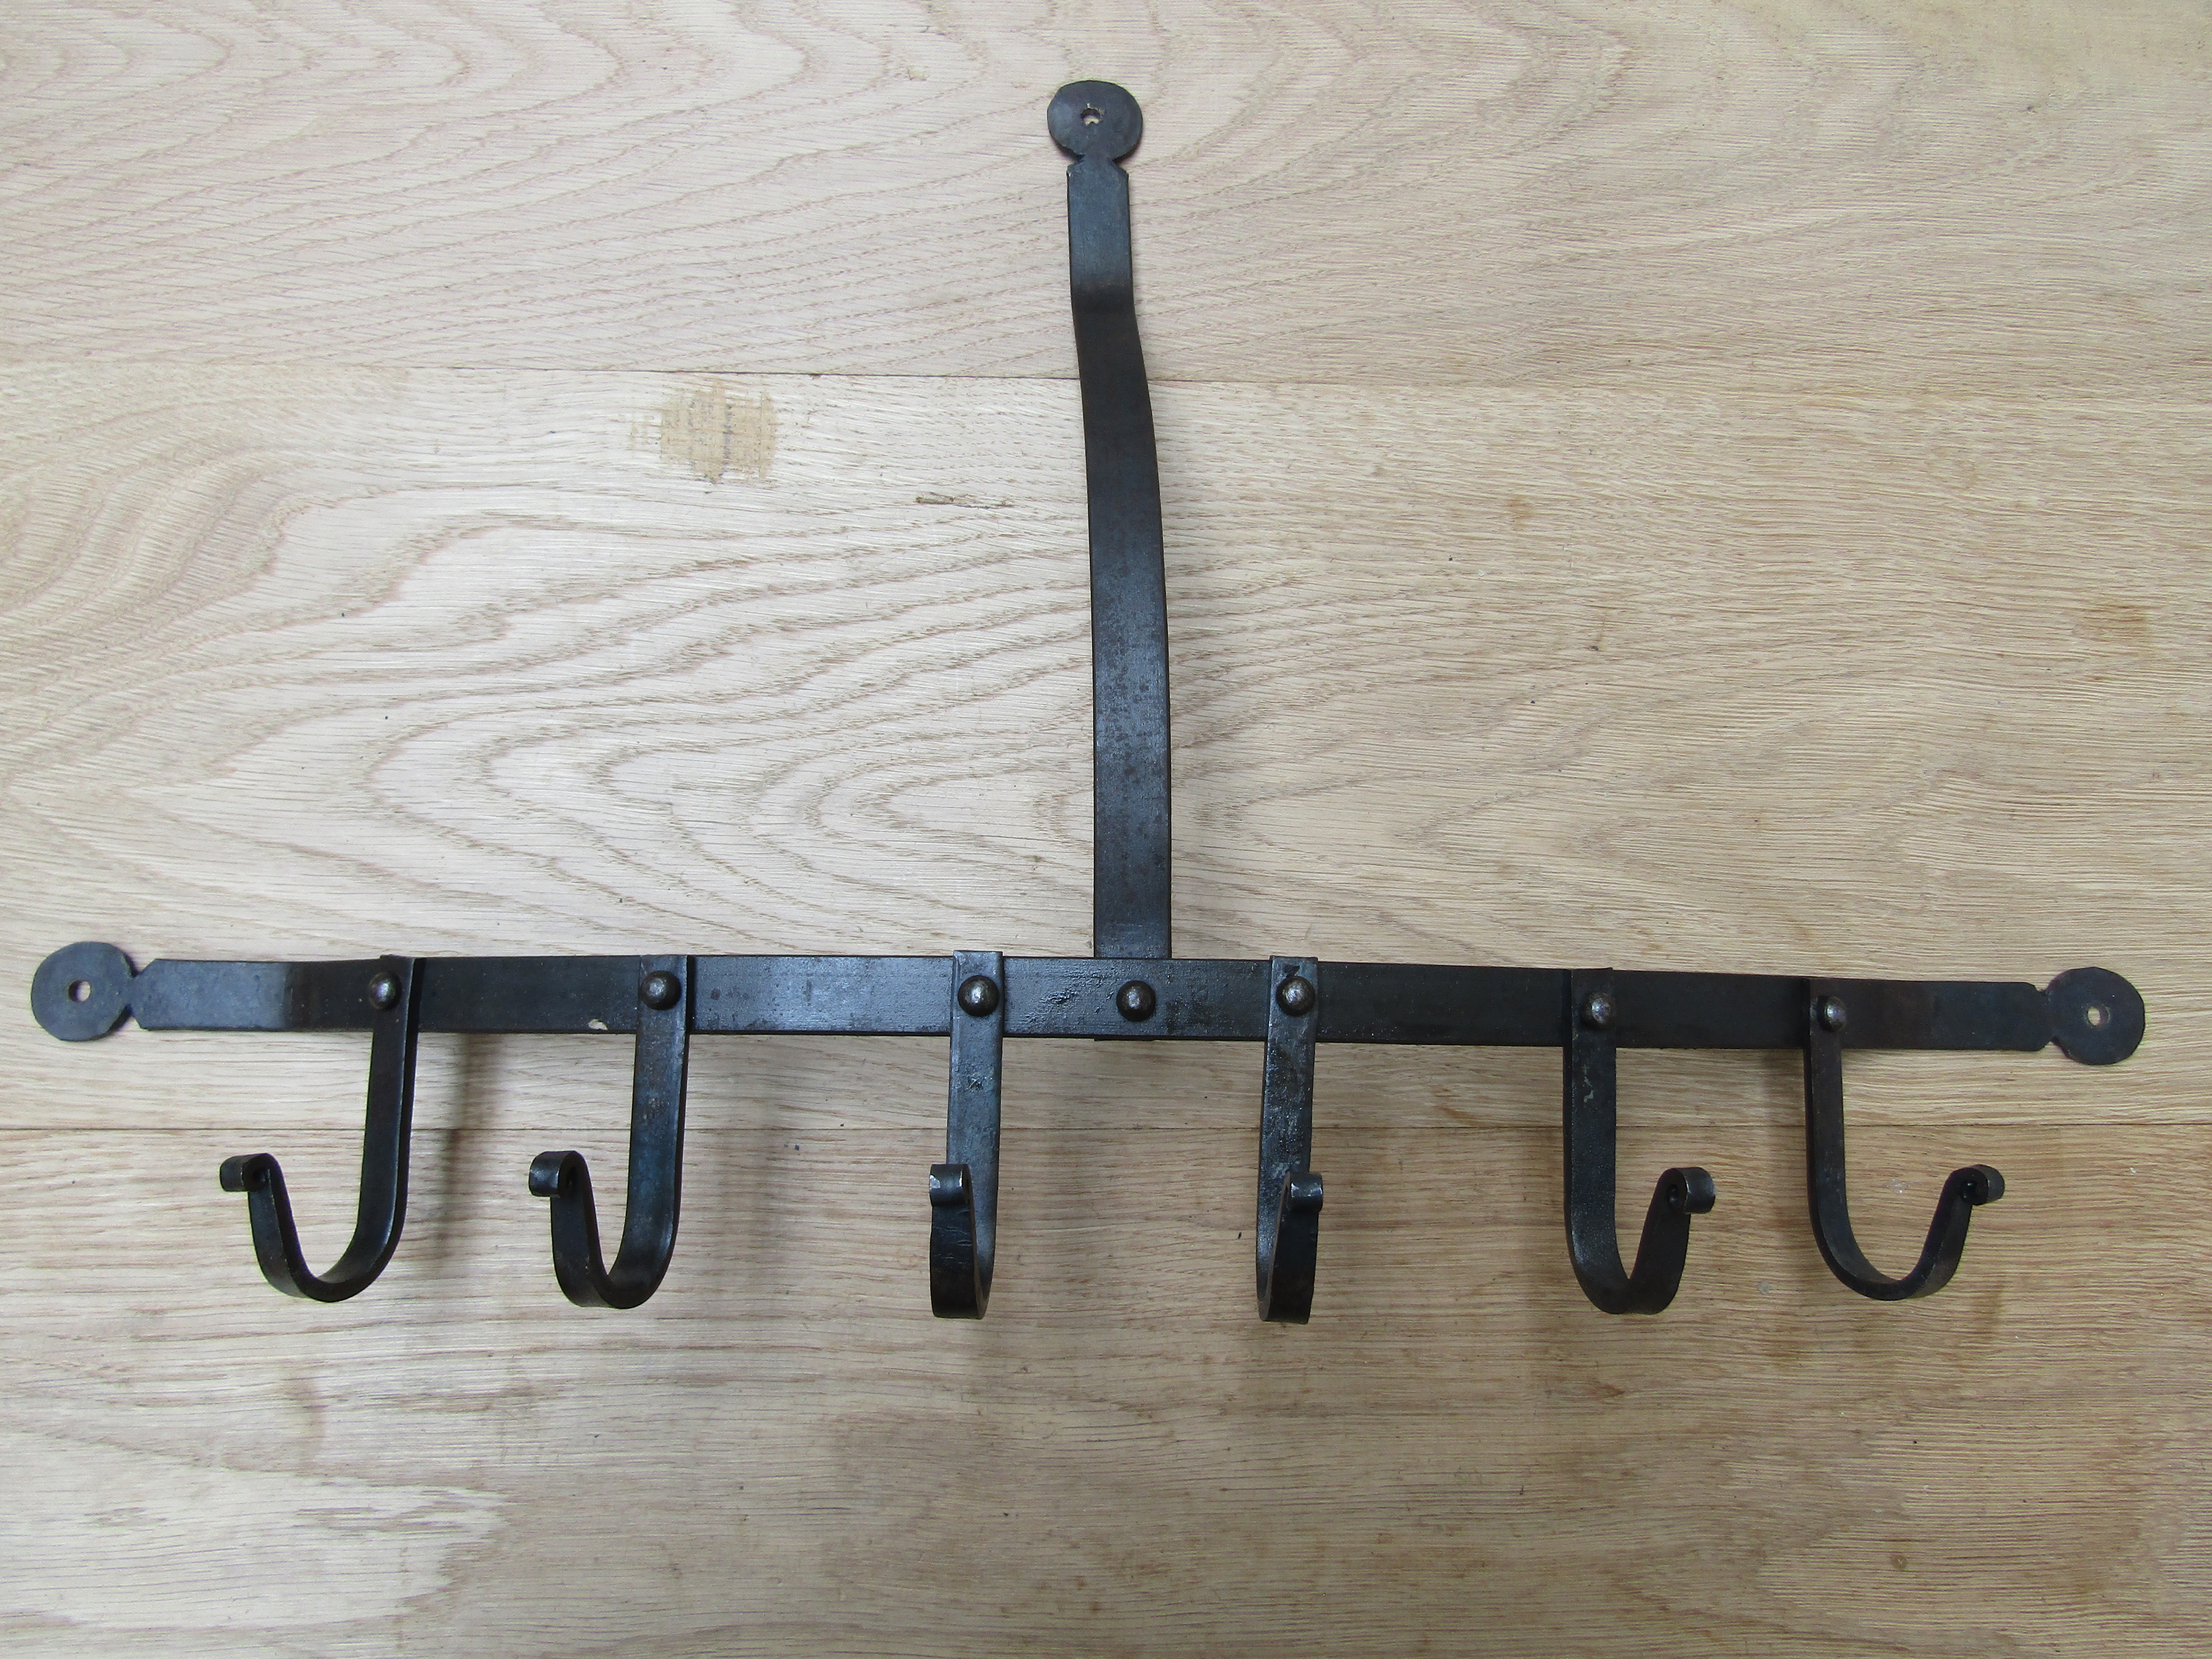 Iron IronmongeryWorld®RUSTIC COTTAGE KITCHEN RAIL pot pan rack country farmhouse utensil hanger hooks